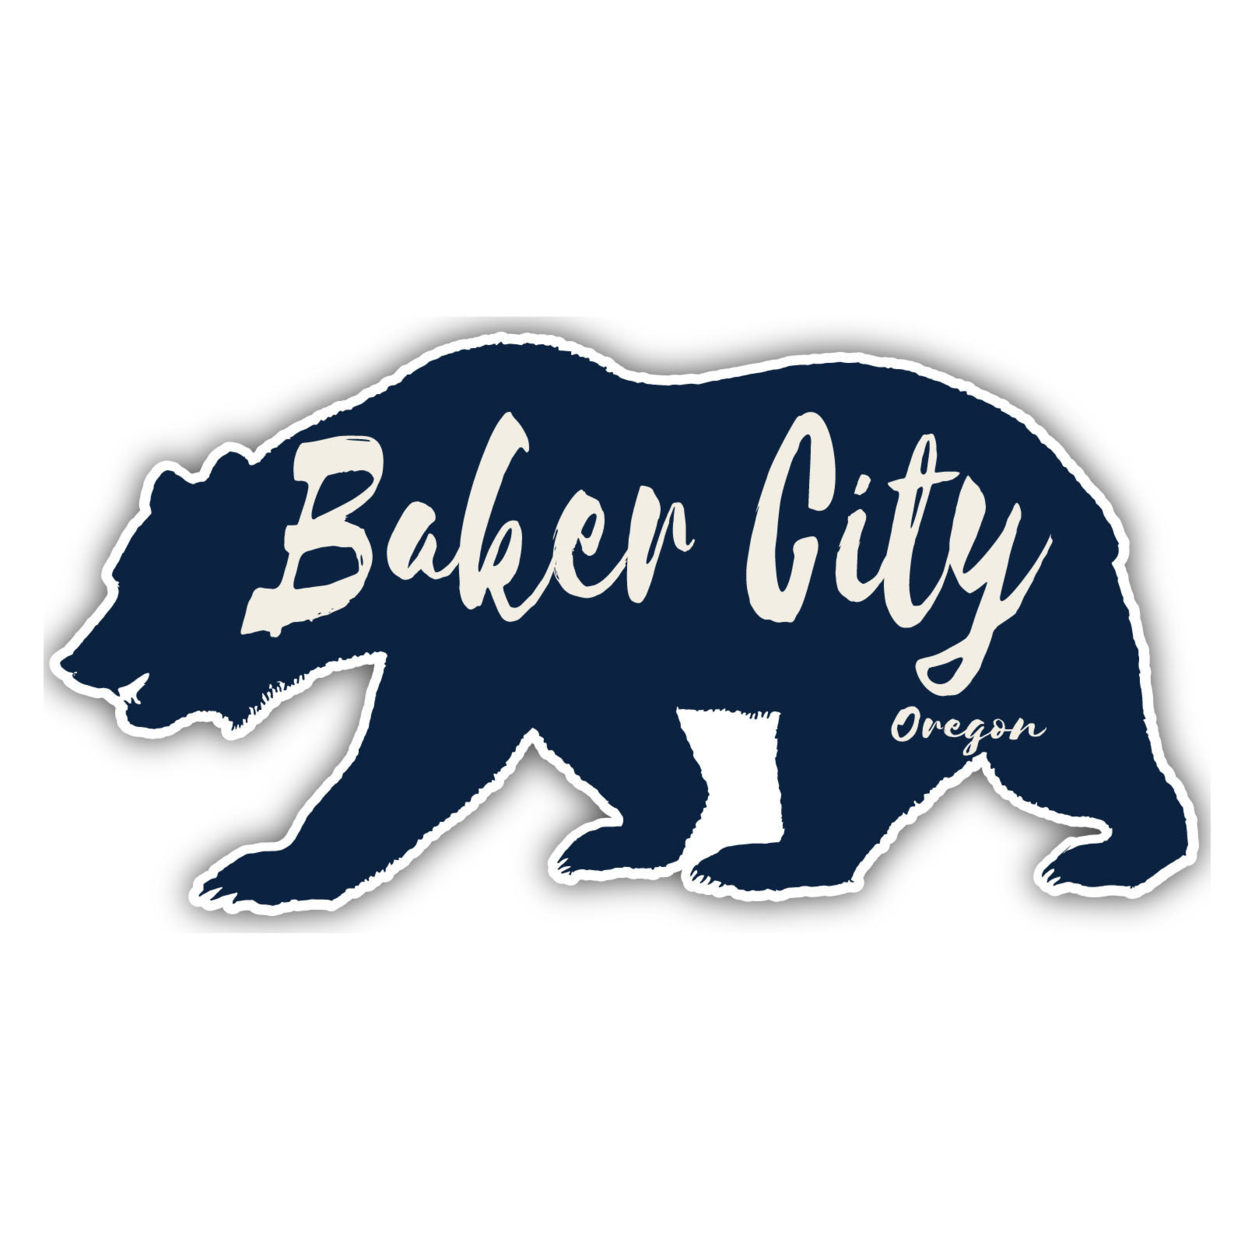 Baker City Oregon Souvenir Decorative Stickers (Choose Theme And Size) - Single Unit, 4-Inch, Bear